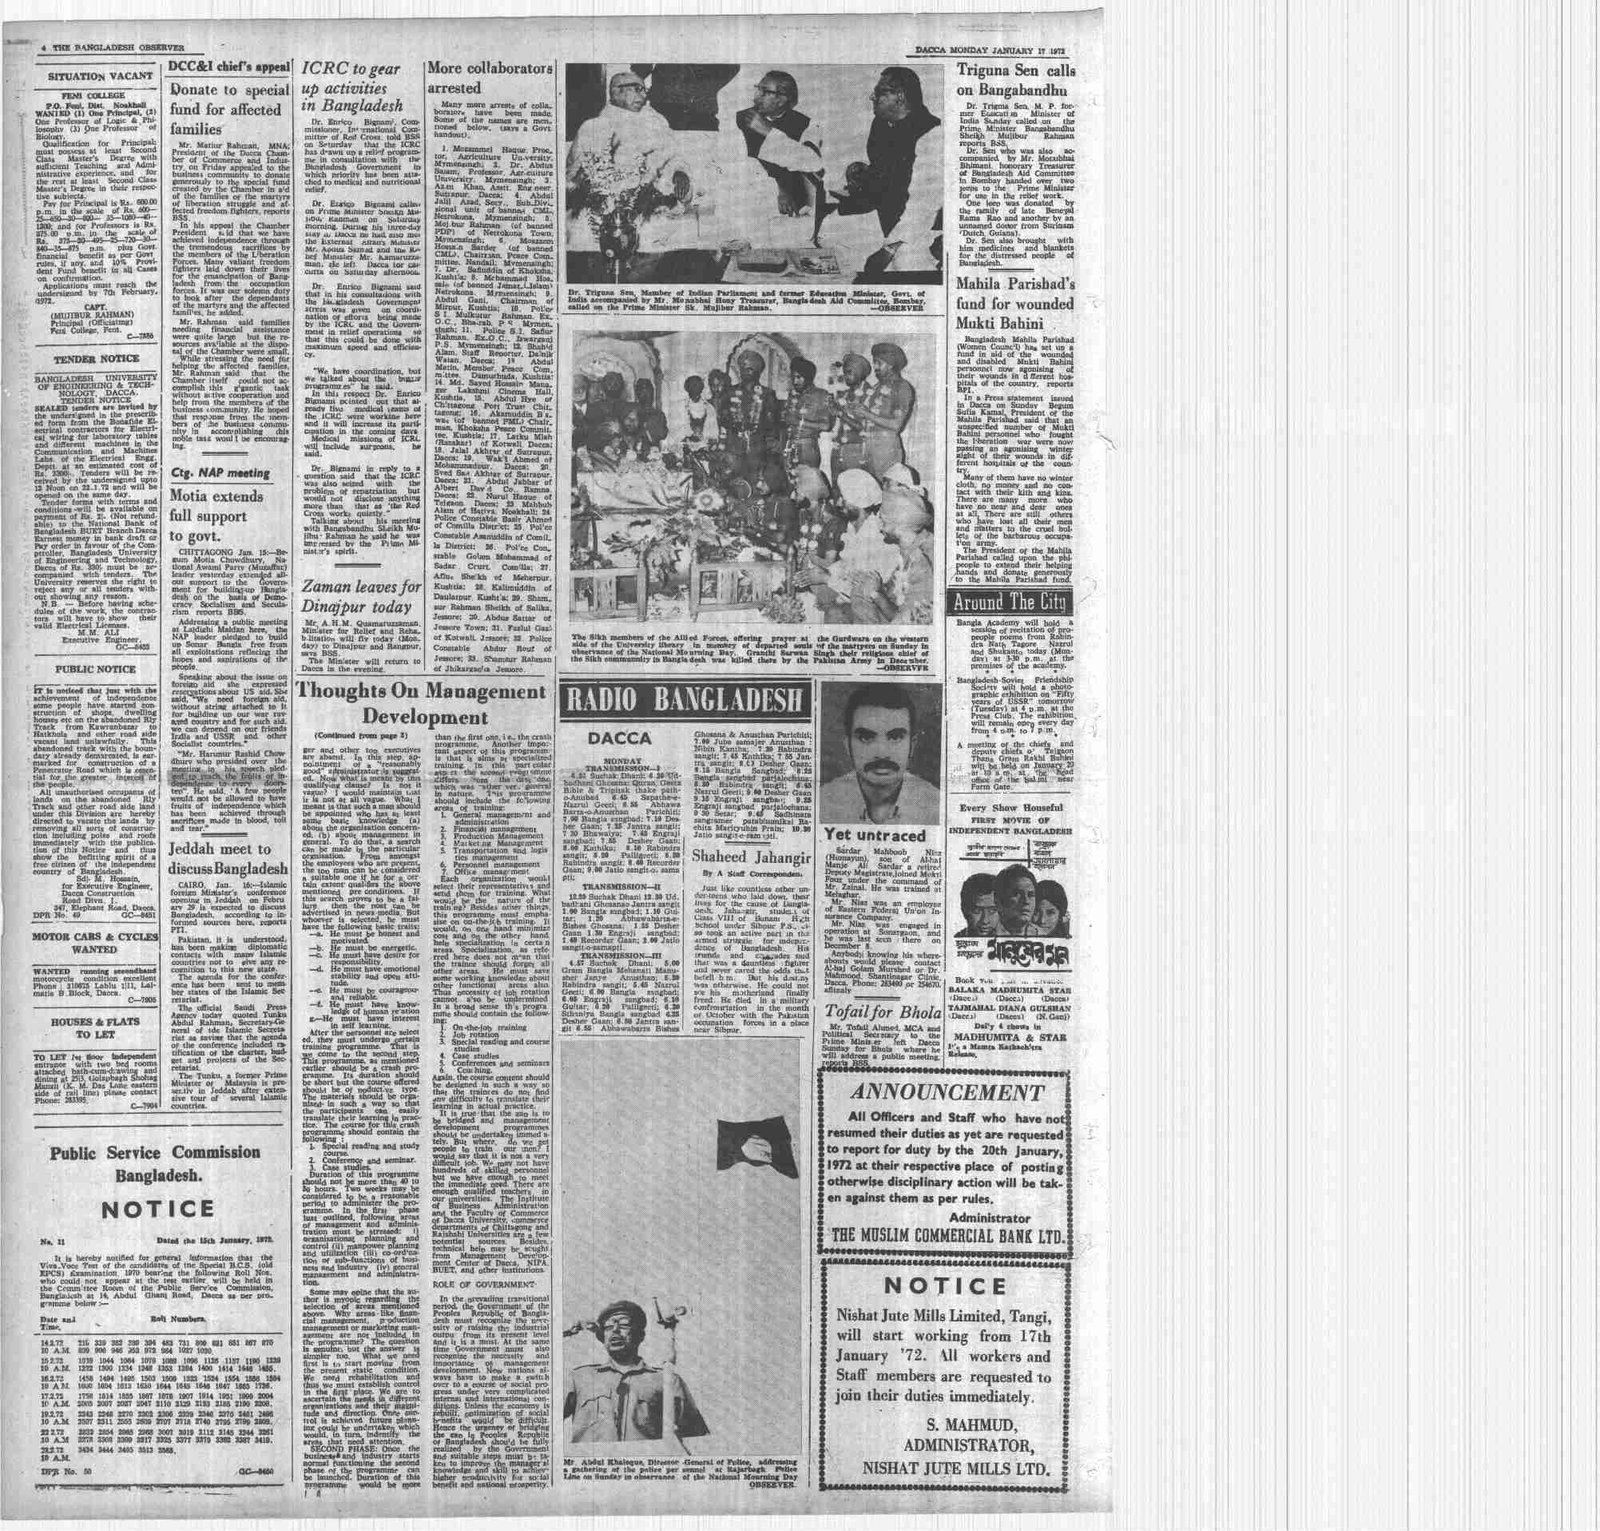 17JAN1972-Bangladesh Observer-Regular-Page 4